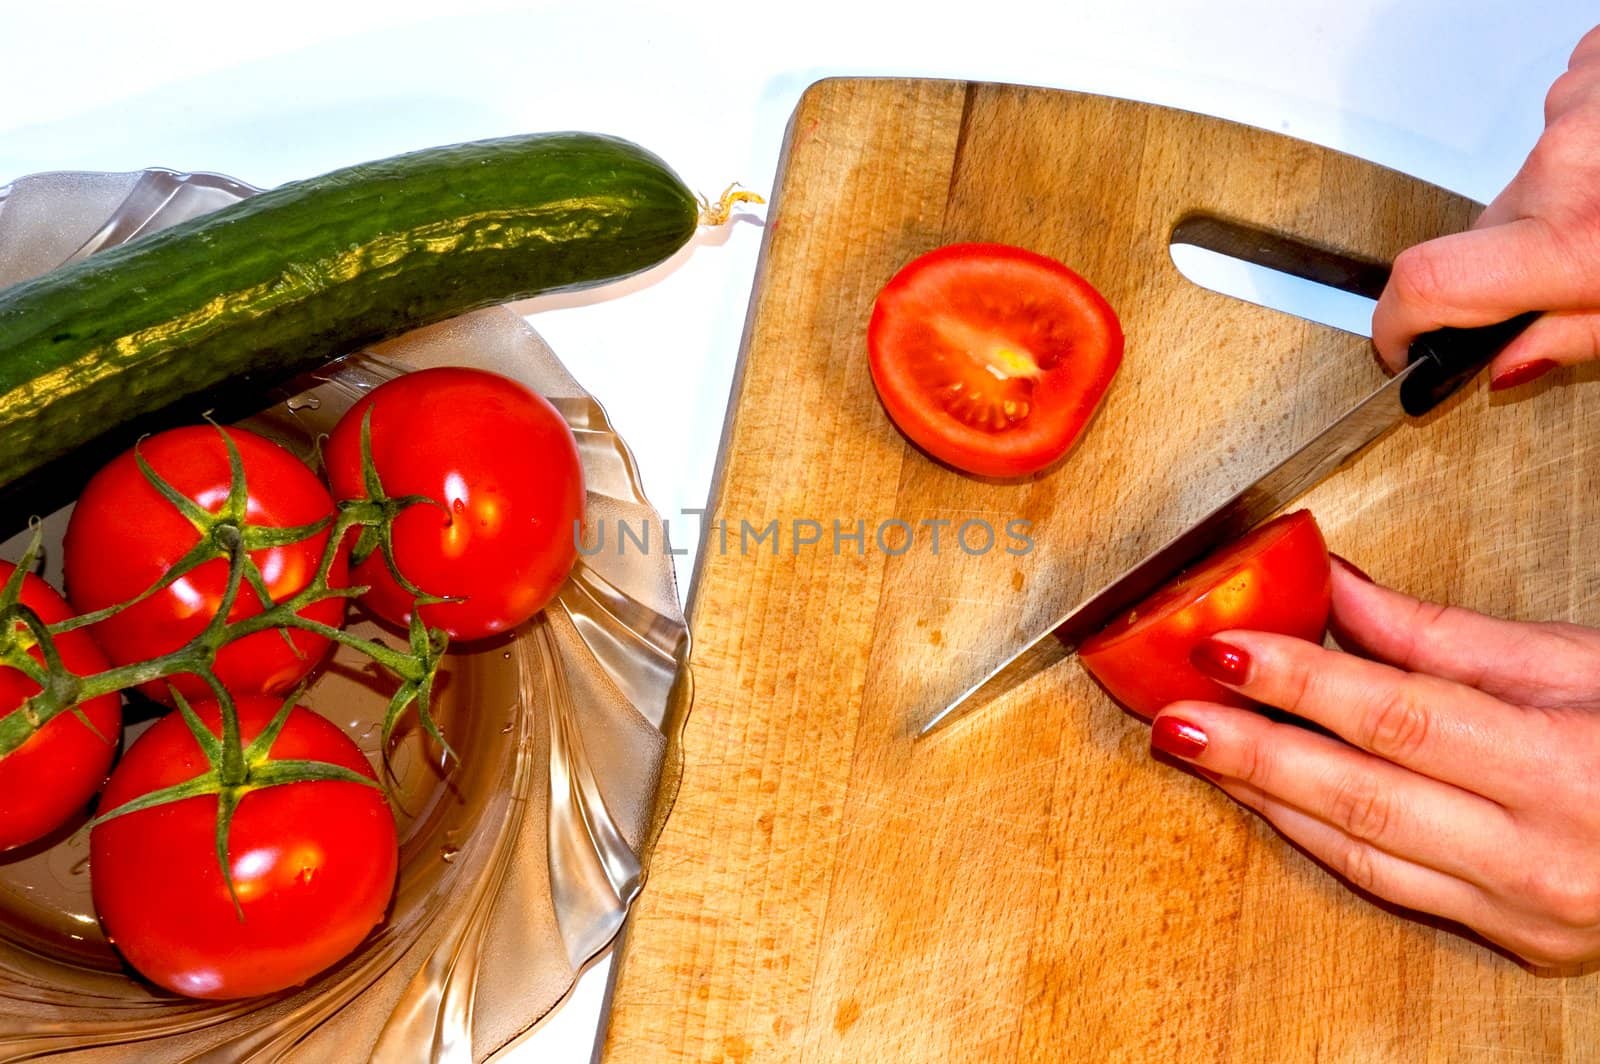 Women cut tomato